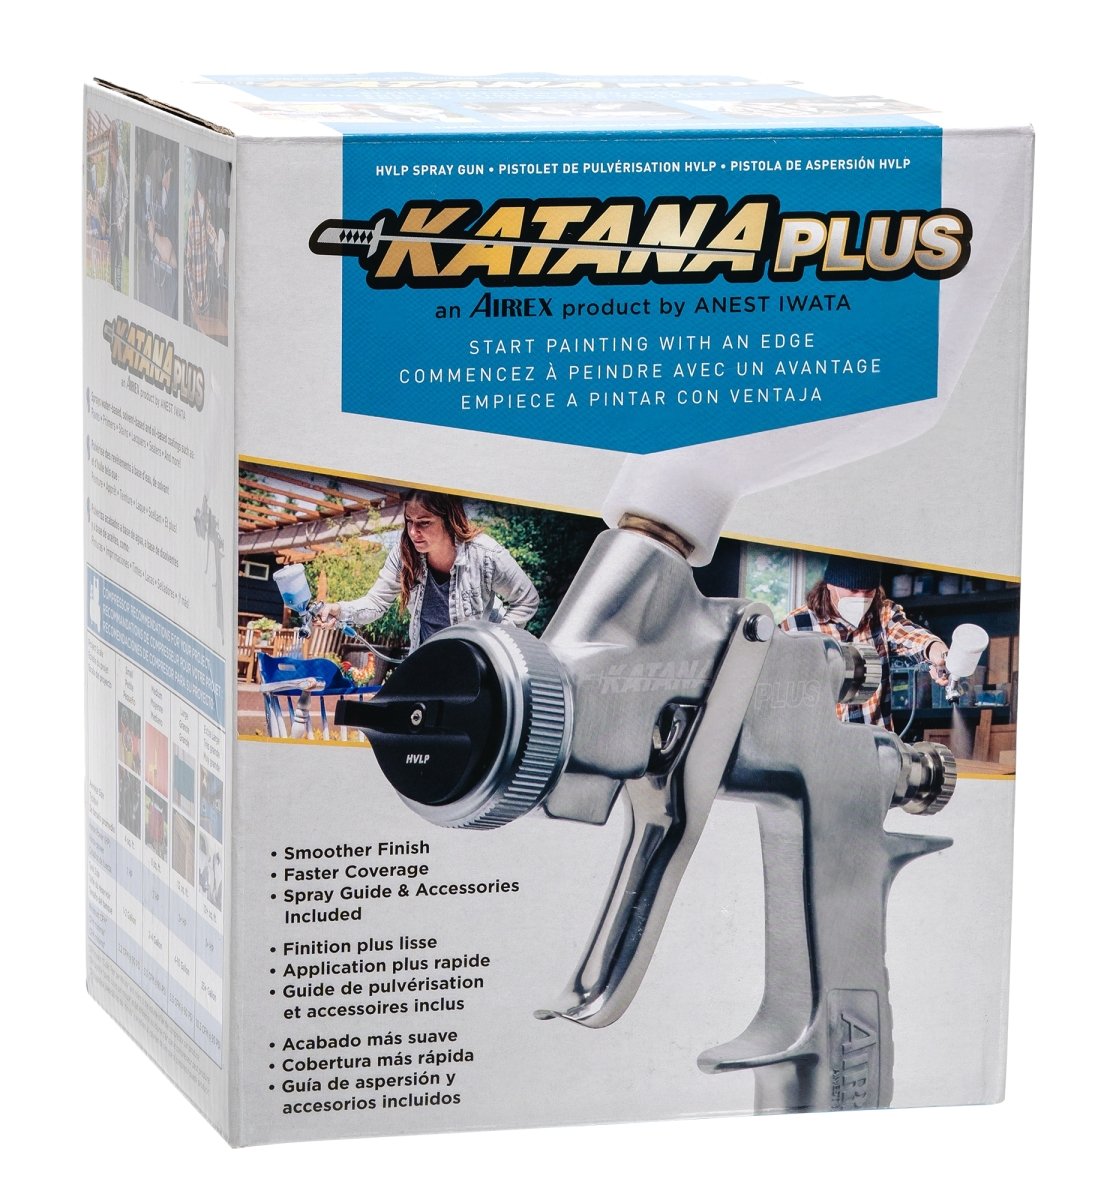 Iwata Katana Plus HVLP Spray Gun - merriartist.com